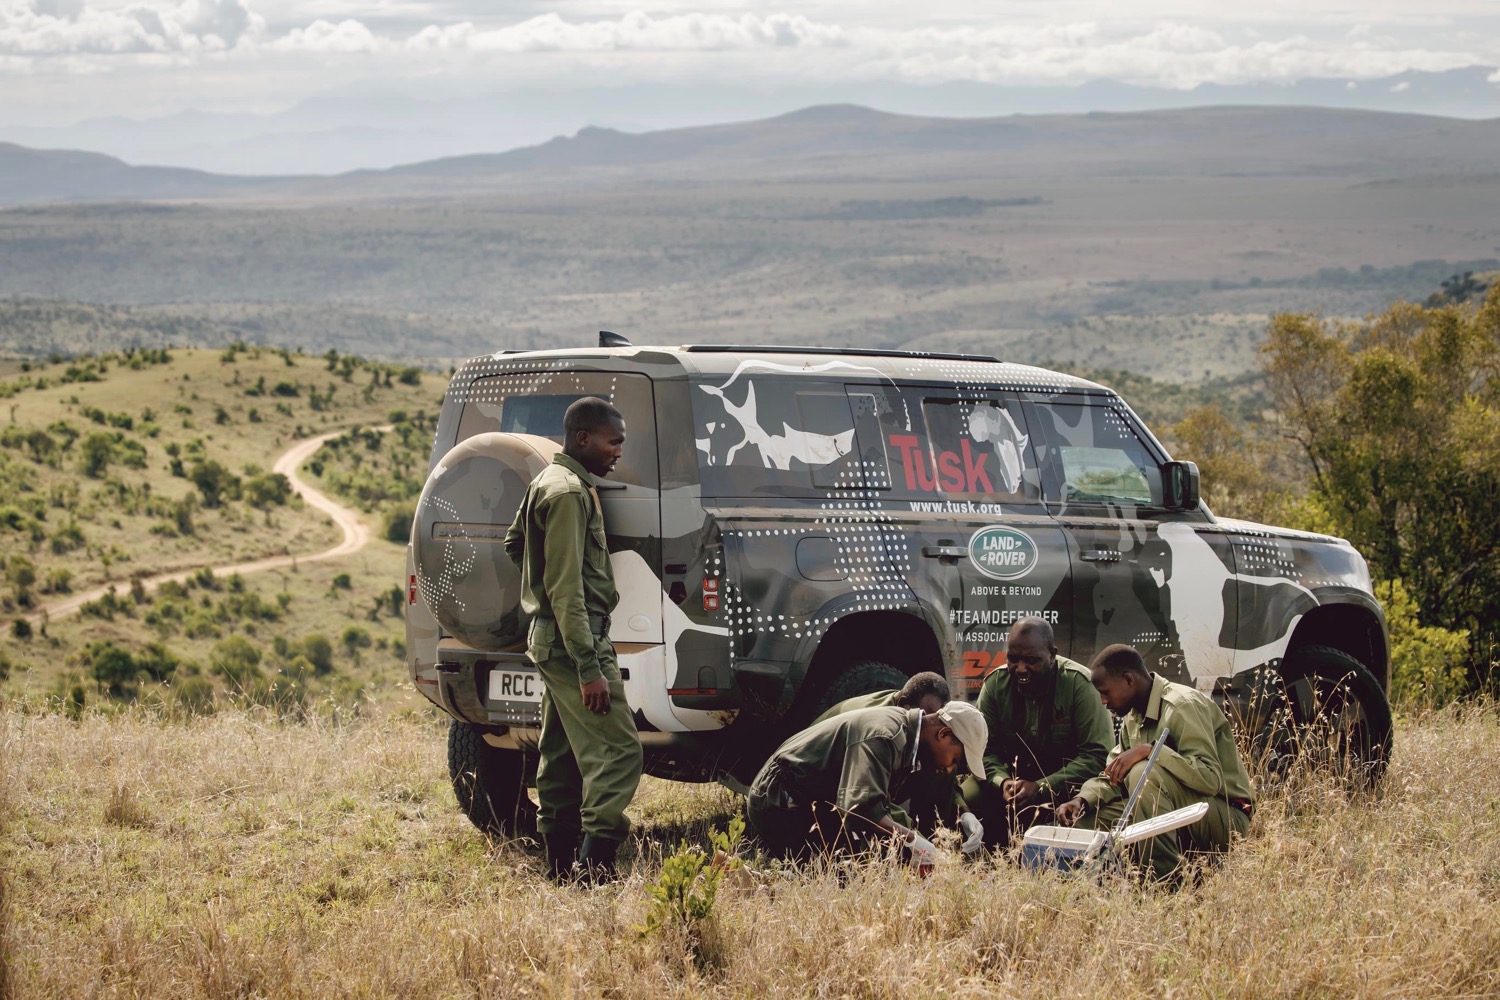 Land Rover Defender testing in Kenya